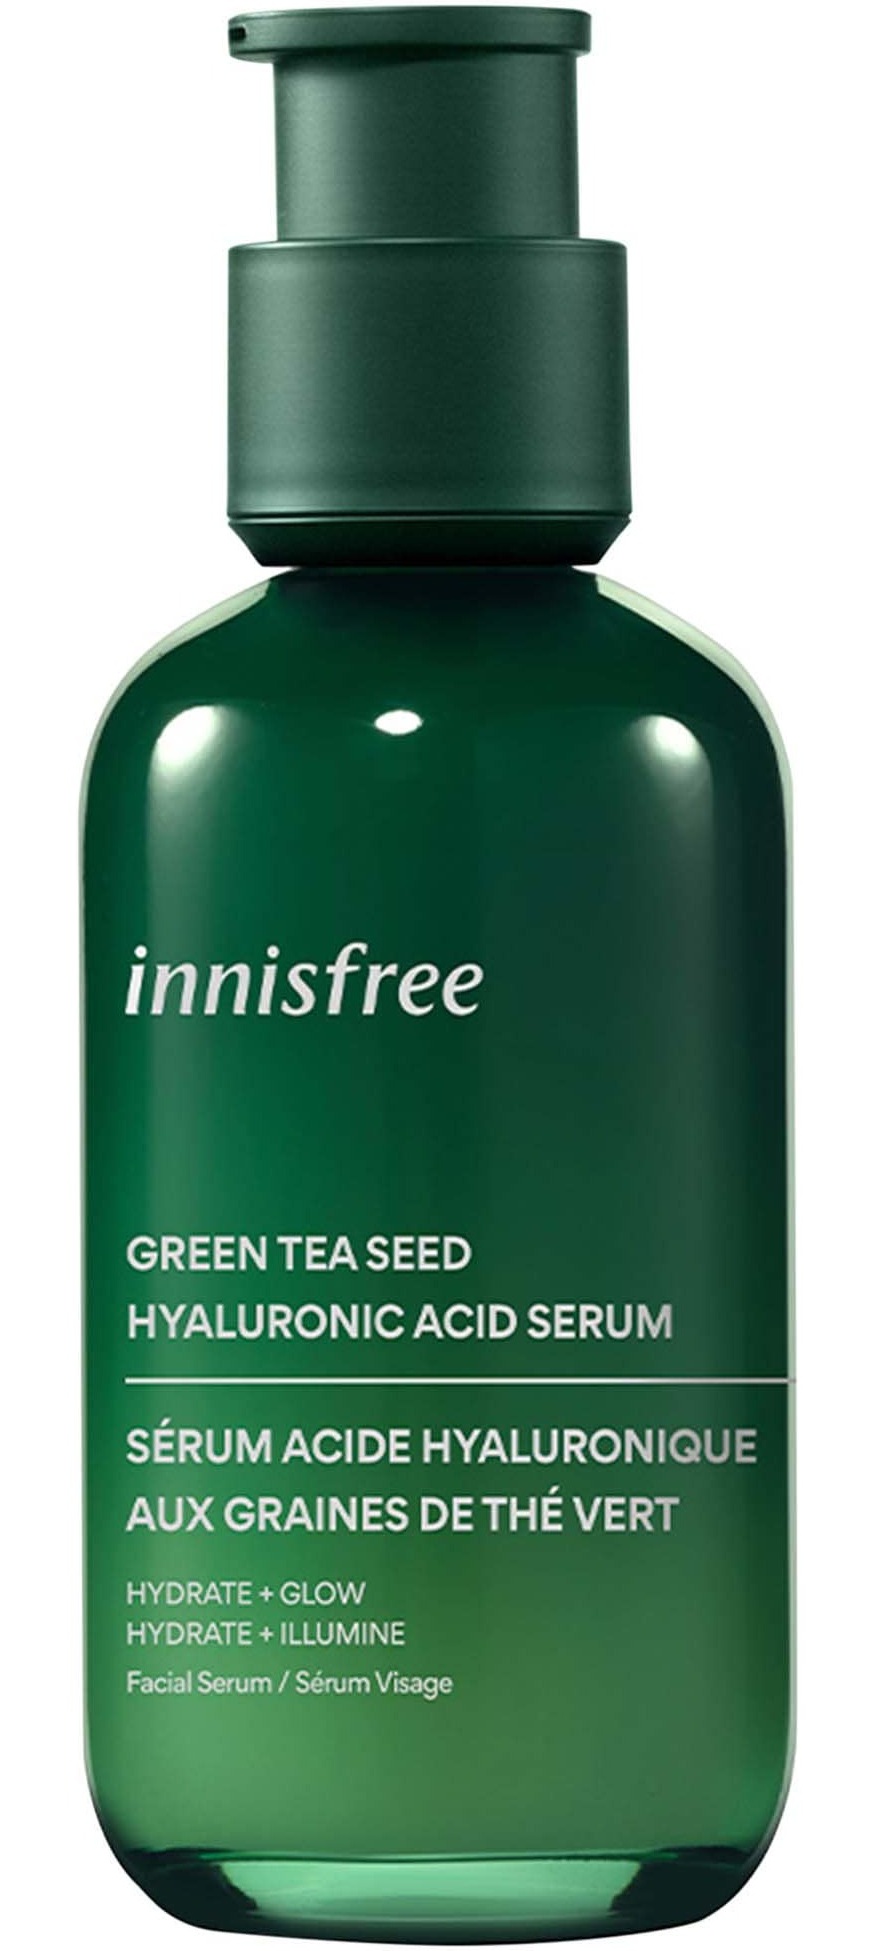 innisfree Green Tea Seed Hyaluronic Acid Serum